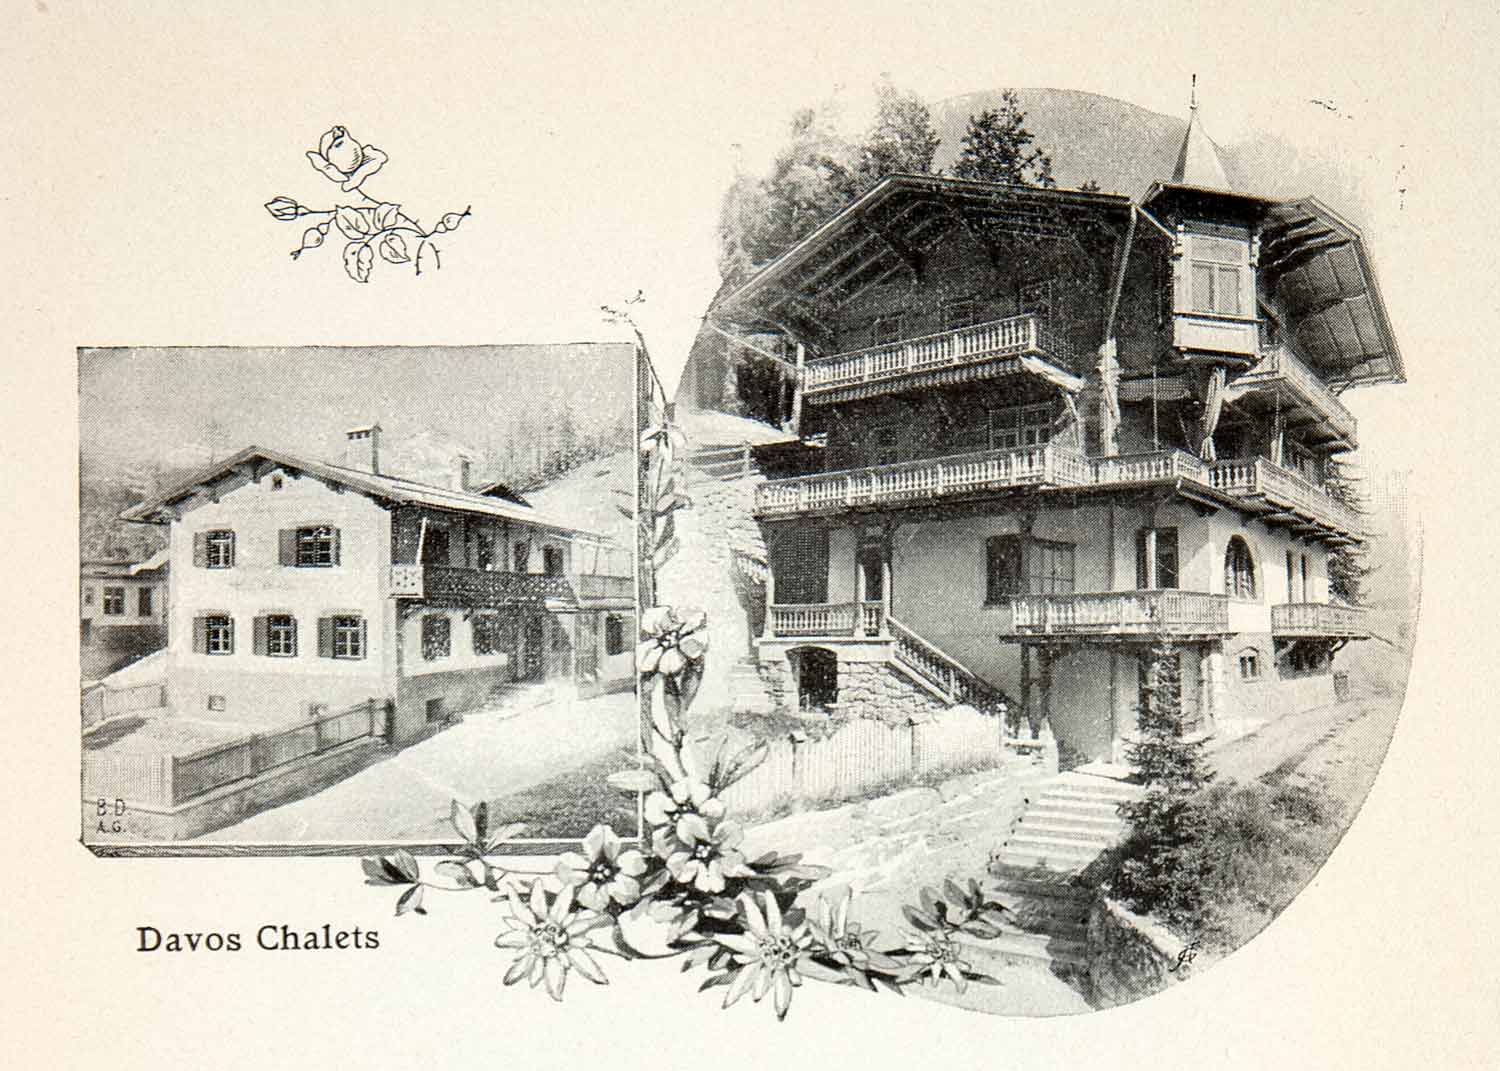 1907 Print Chalet Davos Switzerland Graubunden Alps Mountains Swiss Houses XGQB6